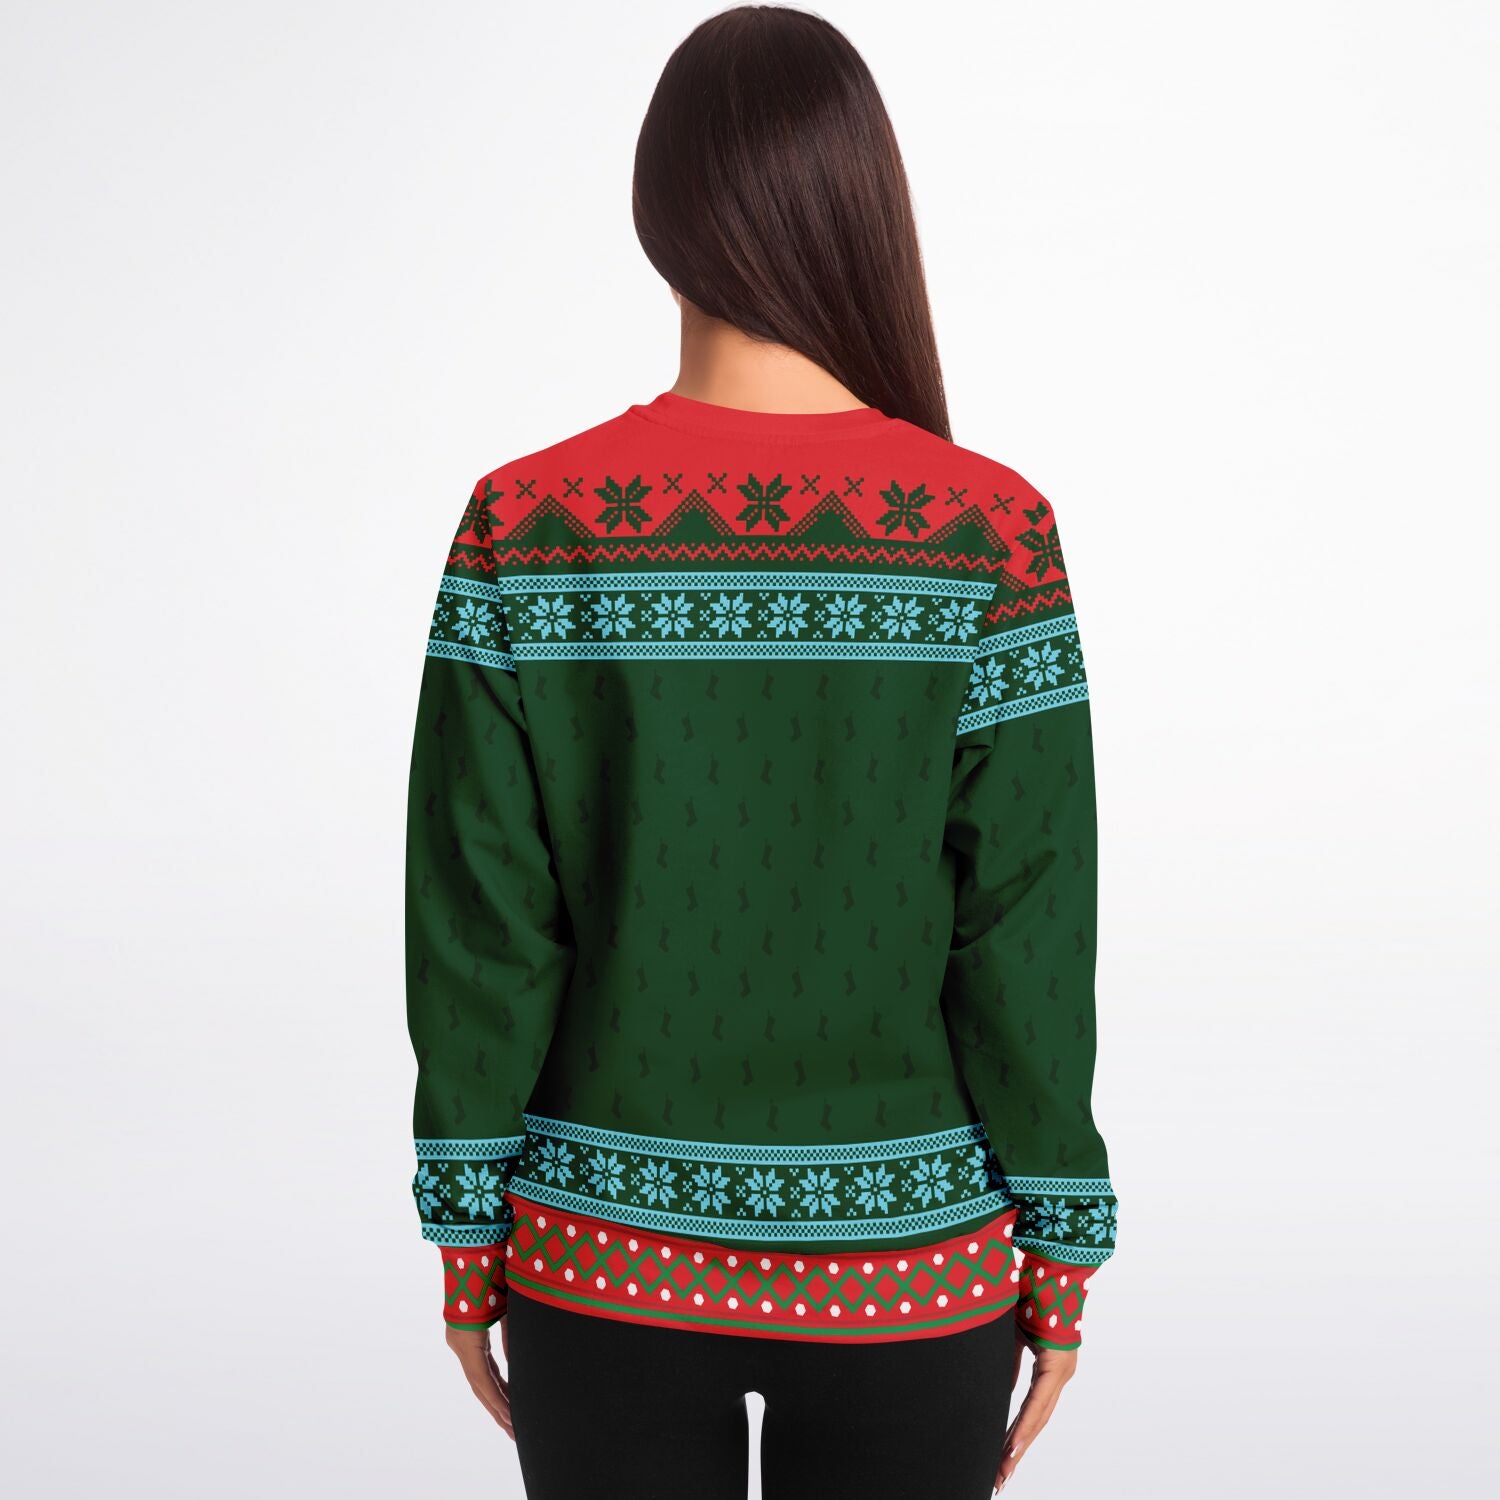 Teacher Ugly Christmas Sweatshirt | Kinder Garden | Elementary | Middle School | High School